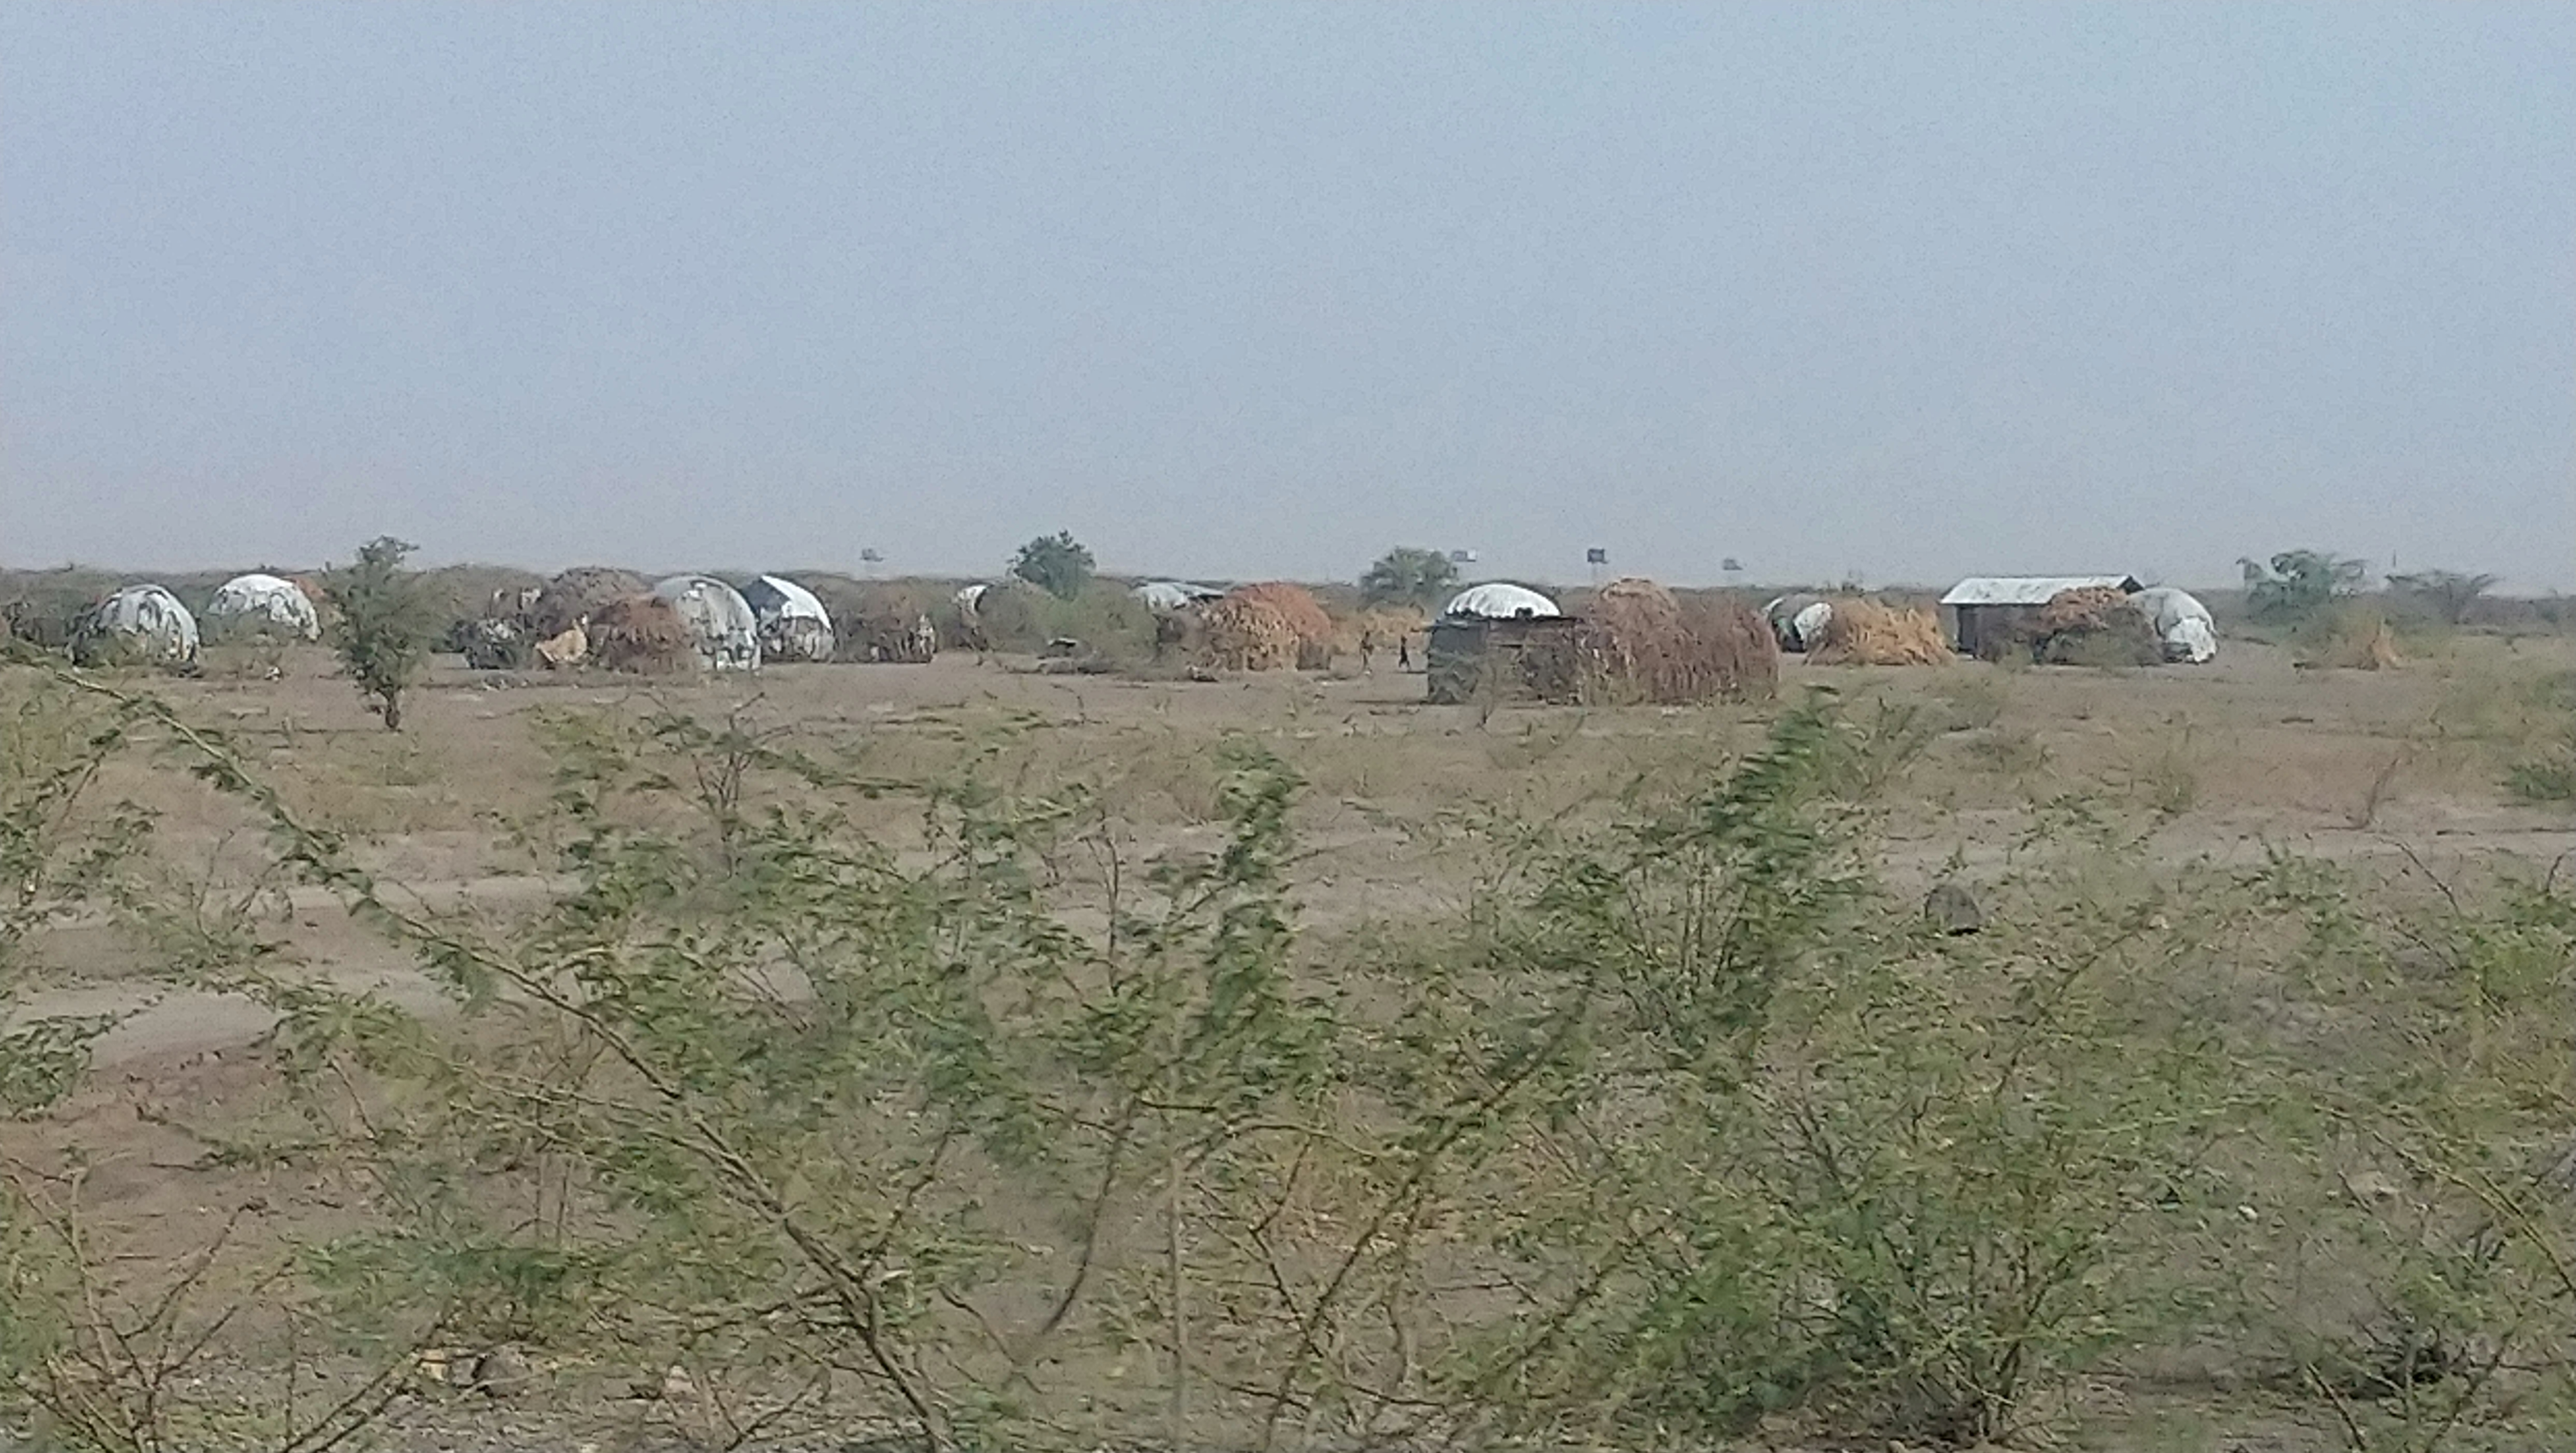 Turkana houses1.JPG